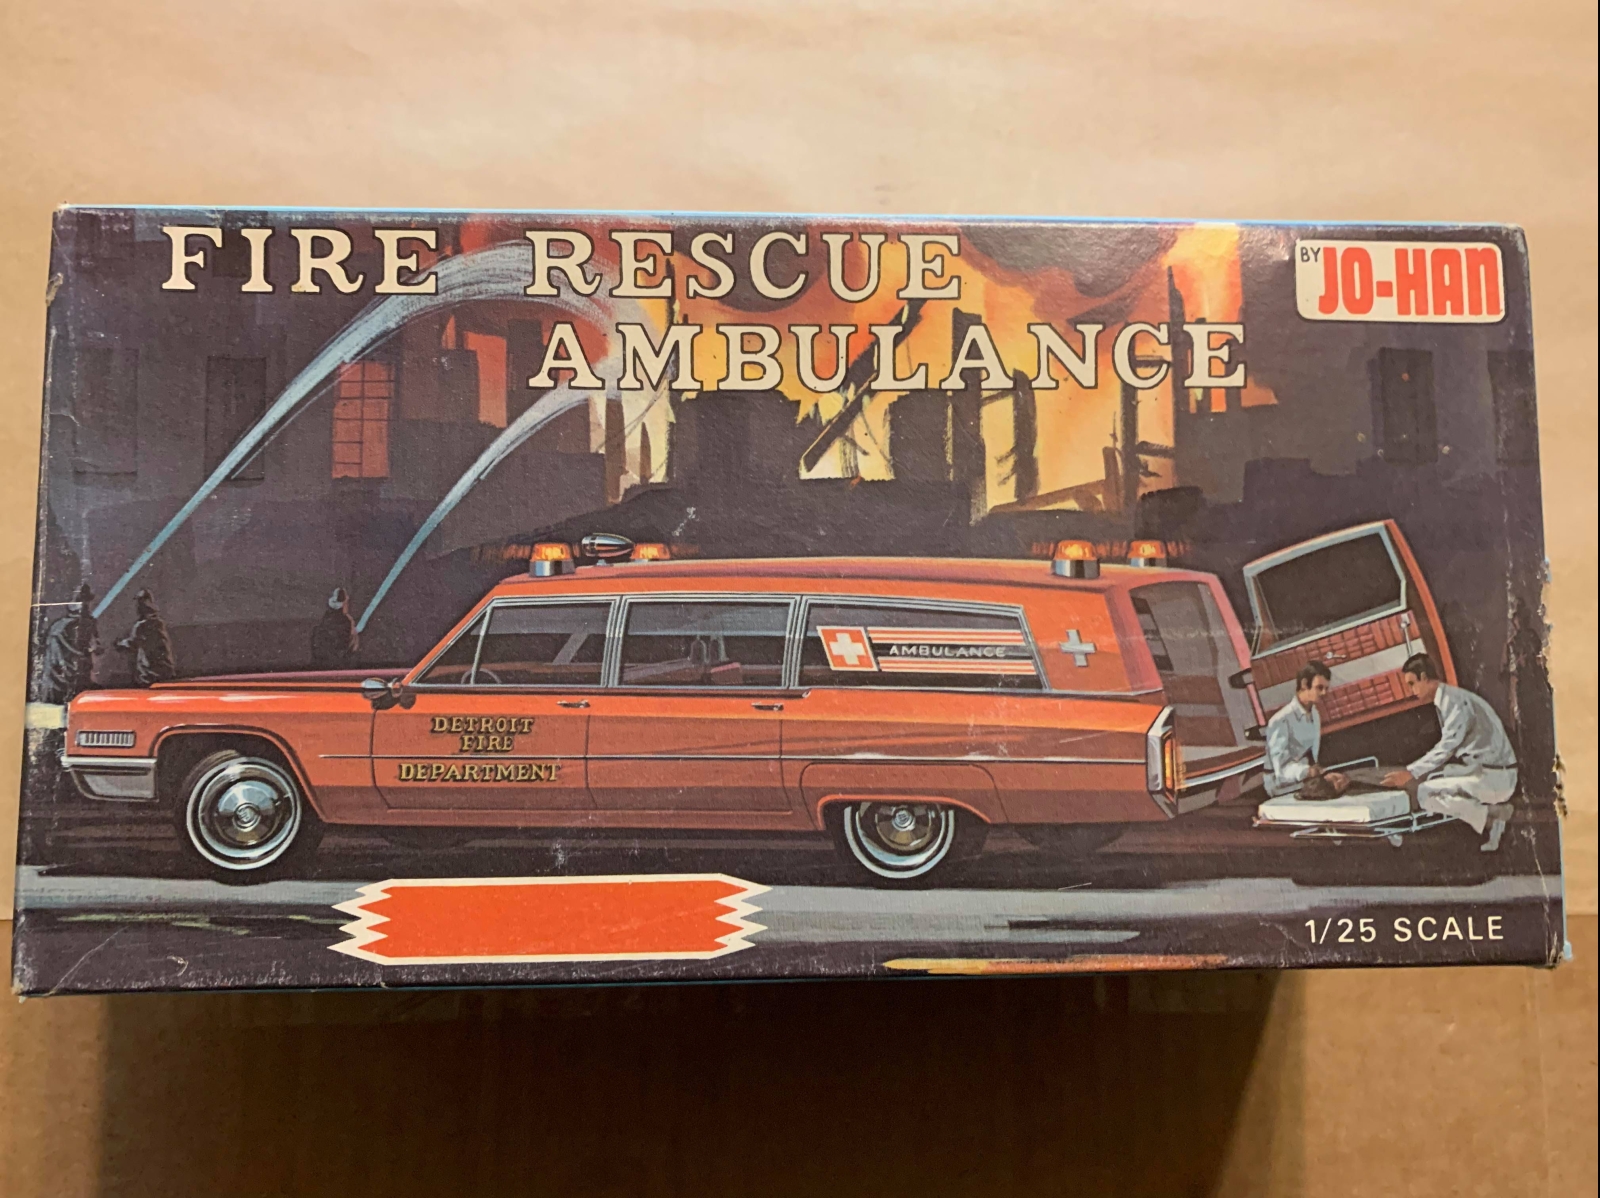 1966 Cadillac Fire Rescue Ambulance by Jo-Han